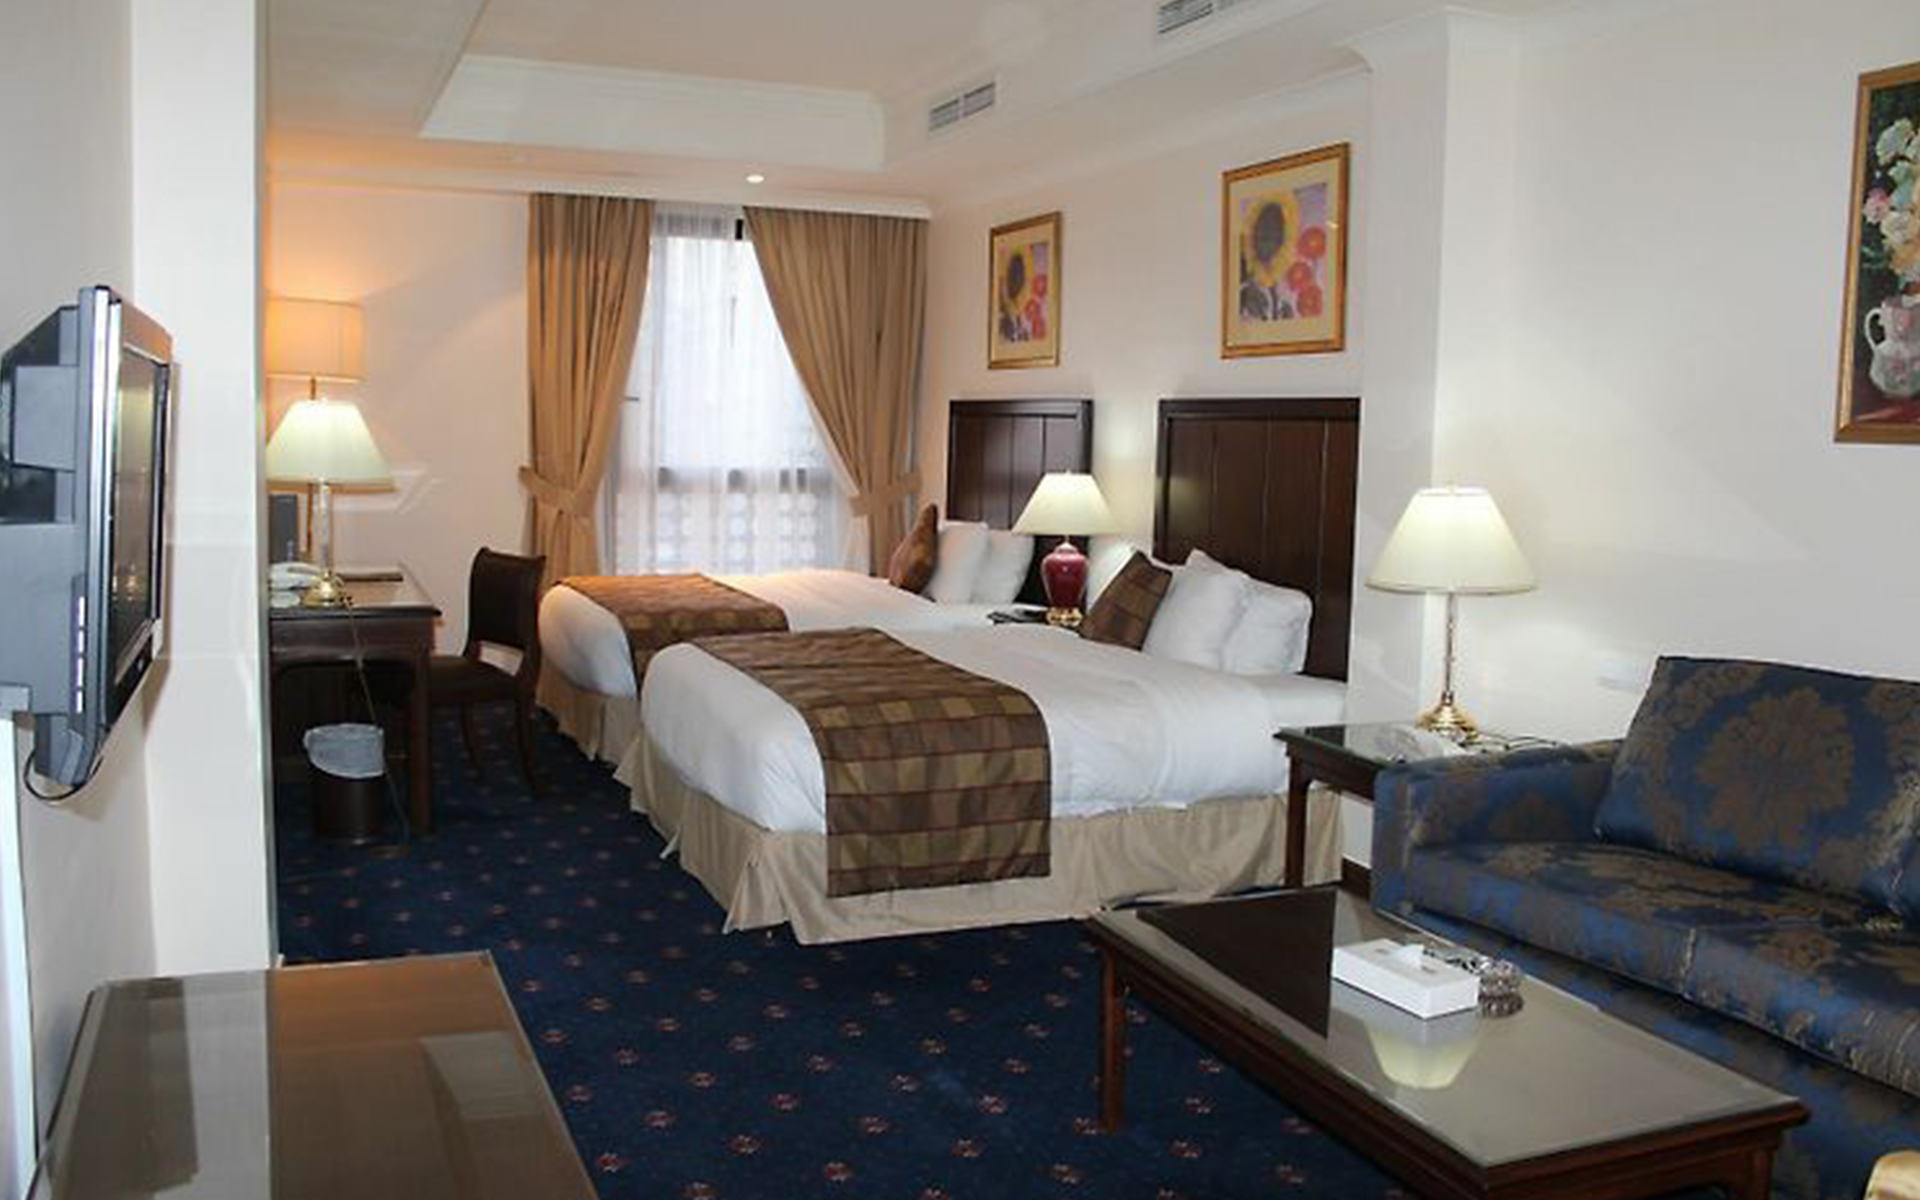 Hotel Dar Al Hijra “InterContinental”.